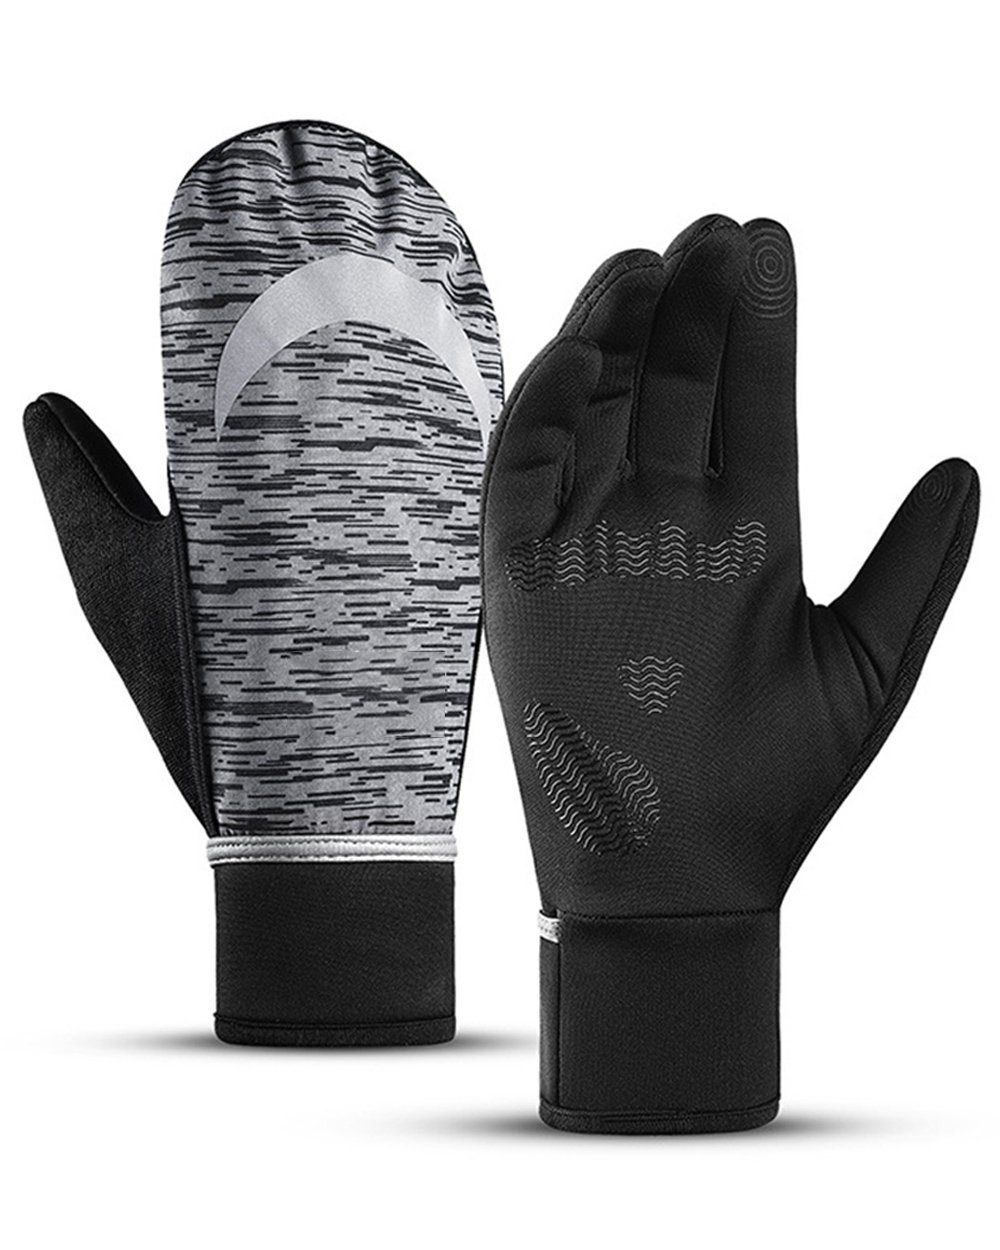 Winterwarme, Handschuhe, Sporthandschuhe Sporthandschuhe, Warme Handschuhe Skihandschuhe, Dekorative faltbare Fahrradhandschuhe